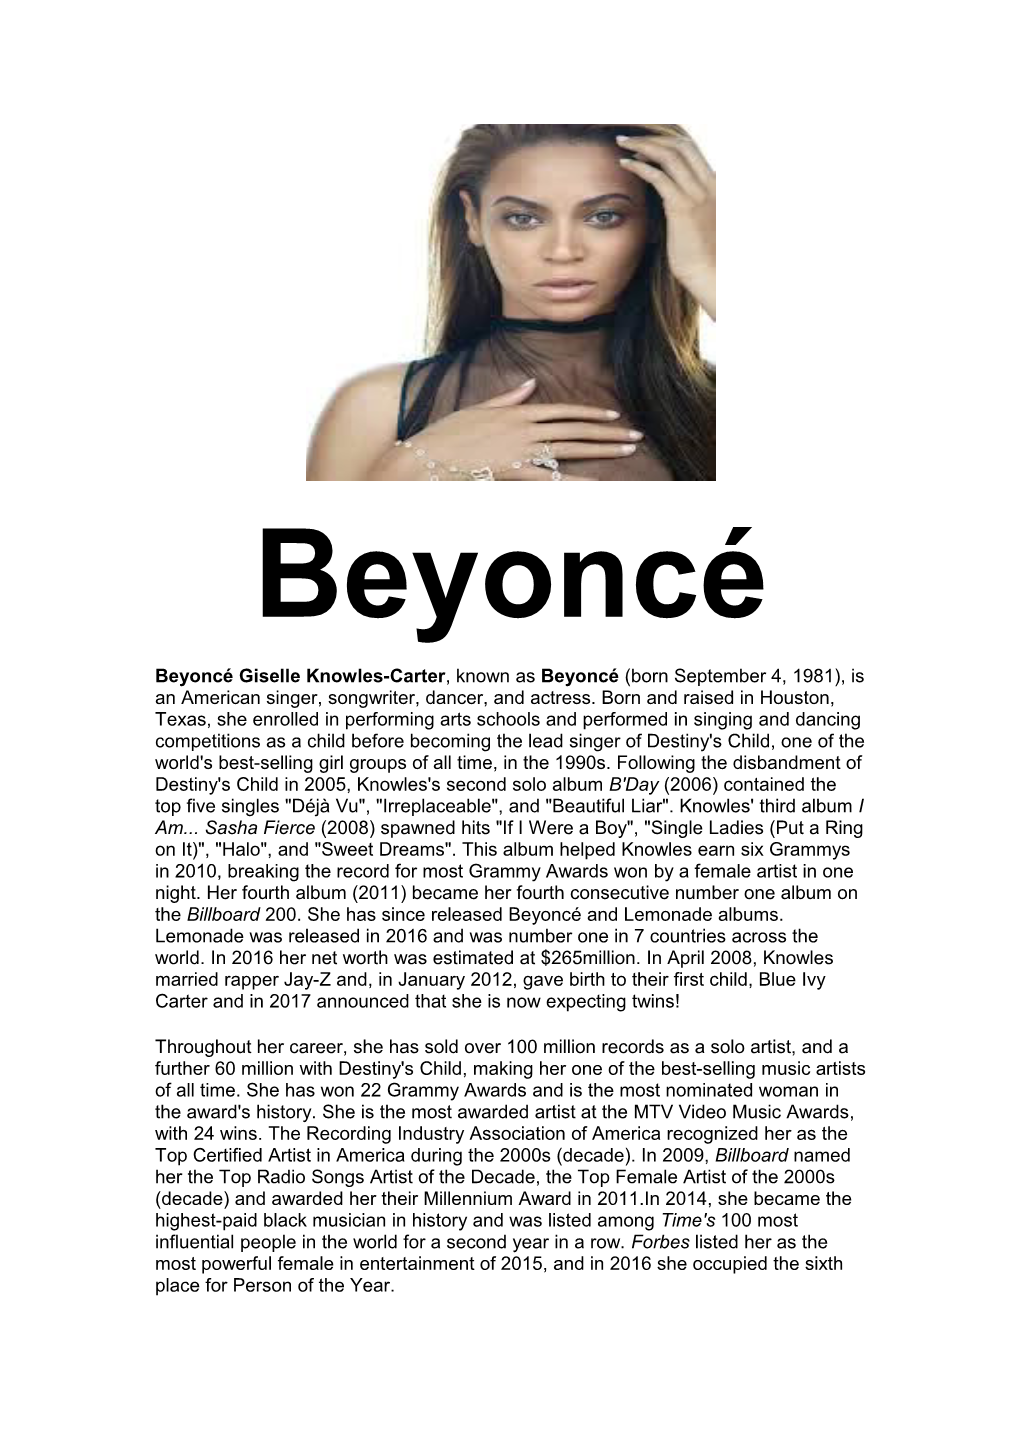 Beyoncé Giselle Knowles-Carter, Known As Beyoncé (Born September 4, 1981), Is an American